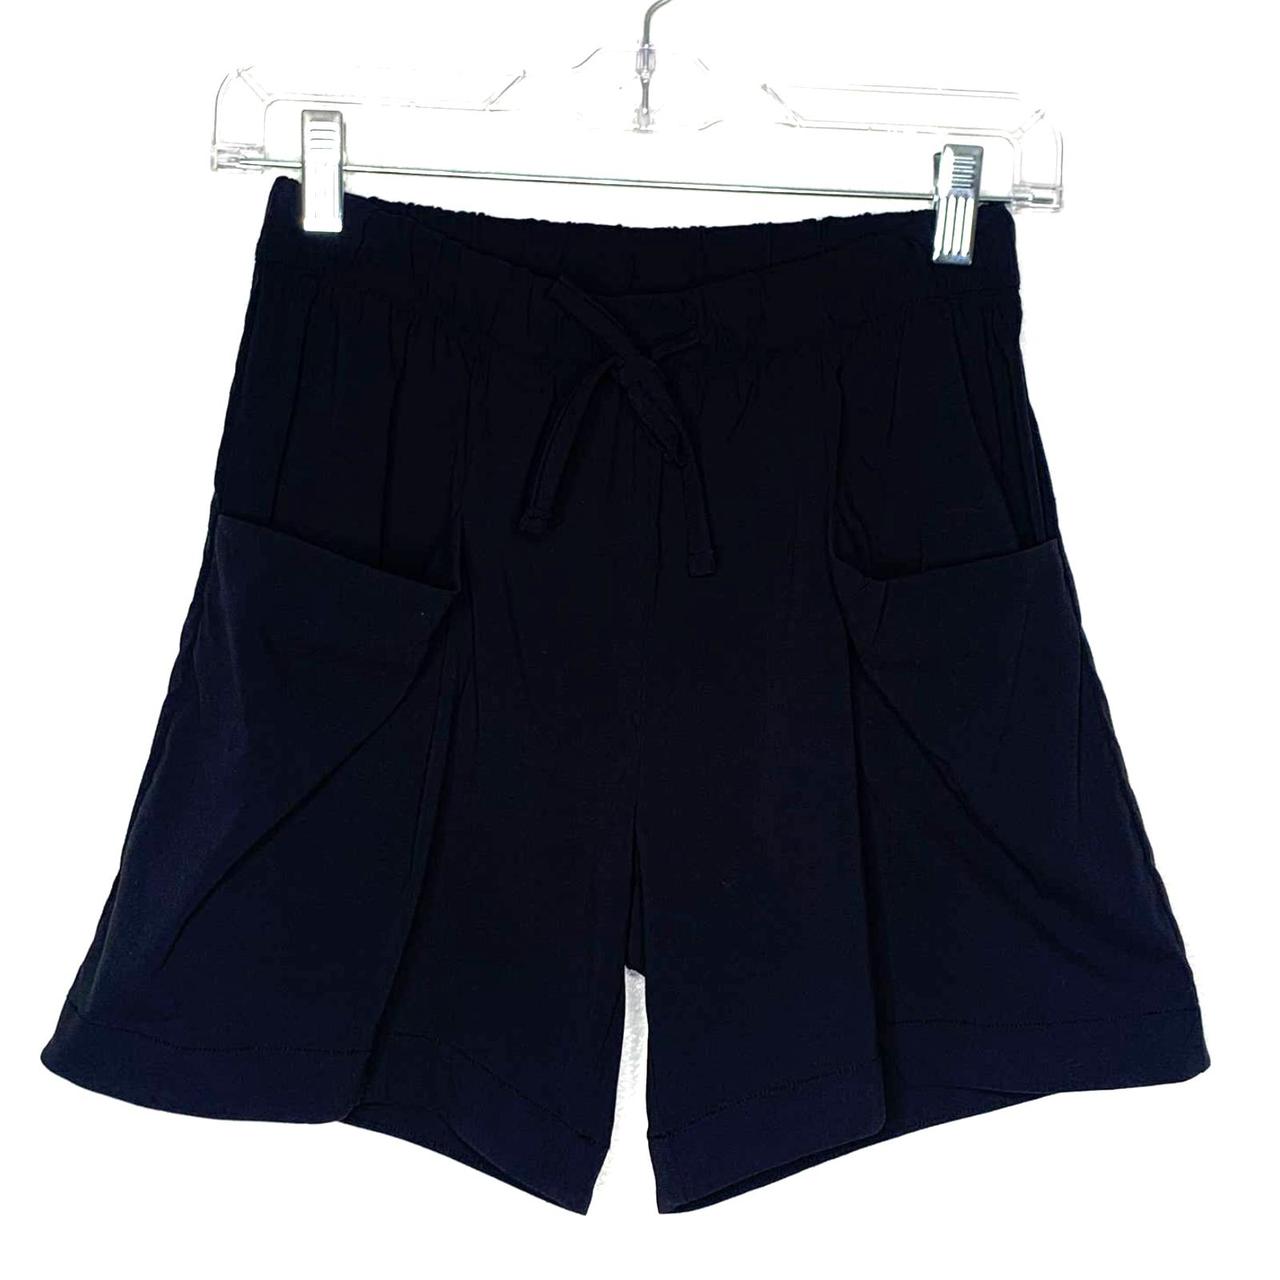 Product Image 2 - LUCY Black Drawstring Athletic Shorts